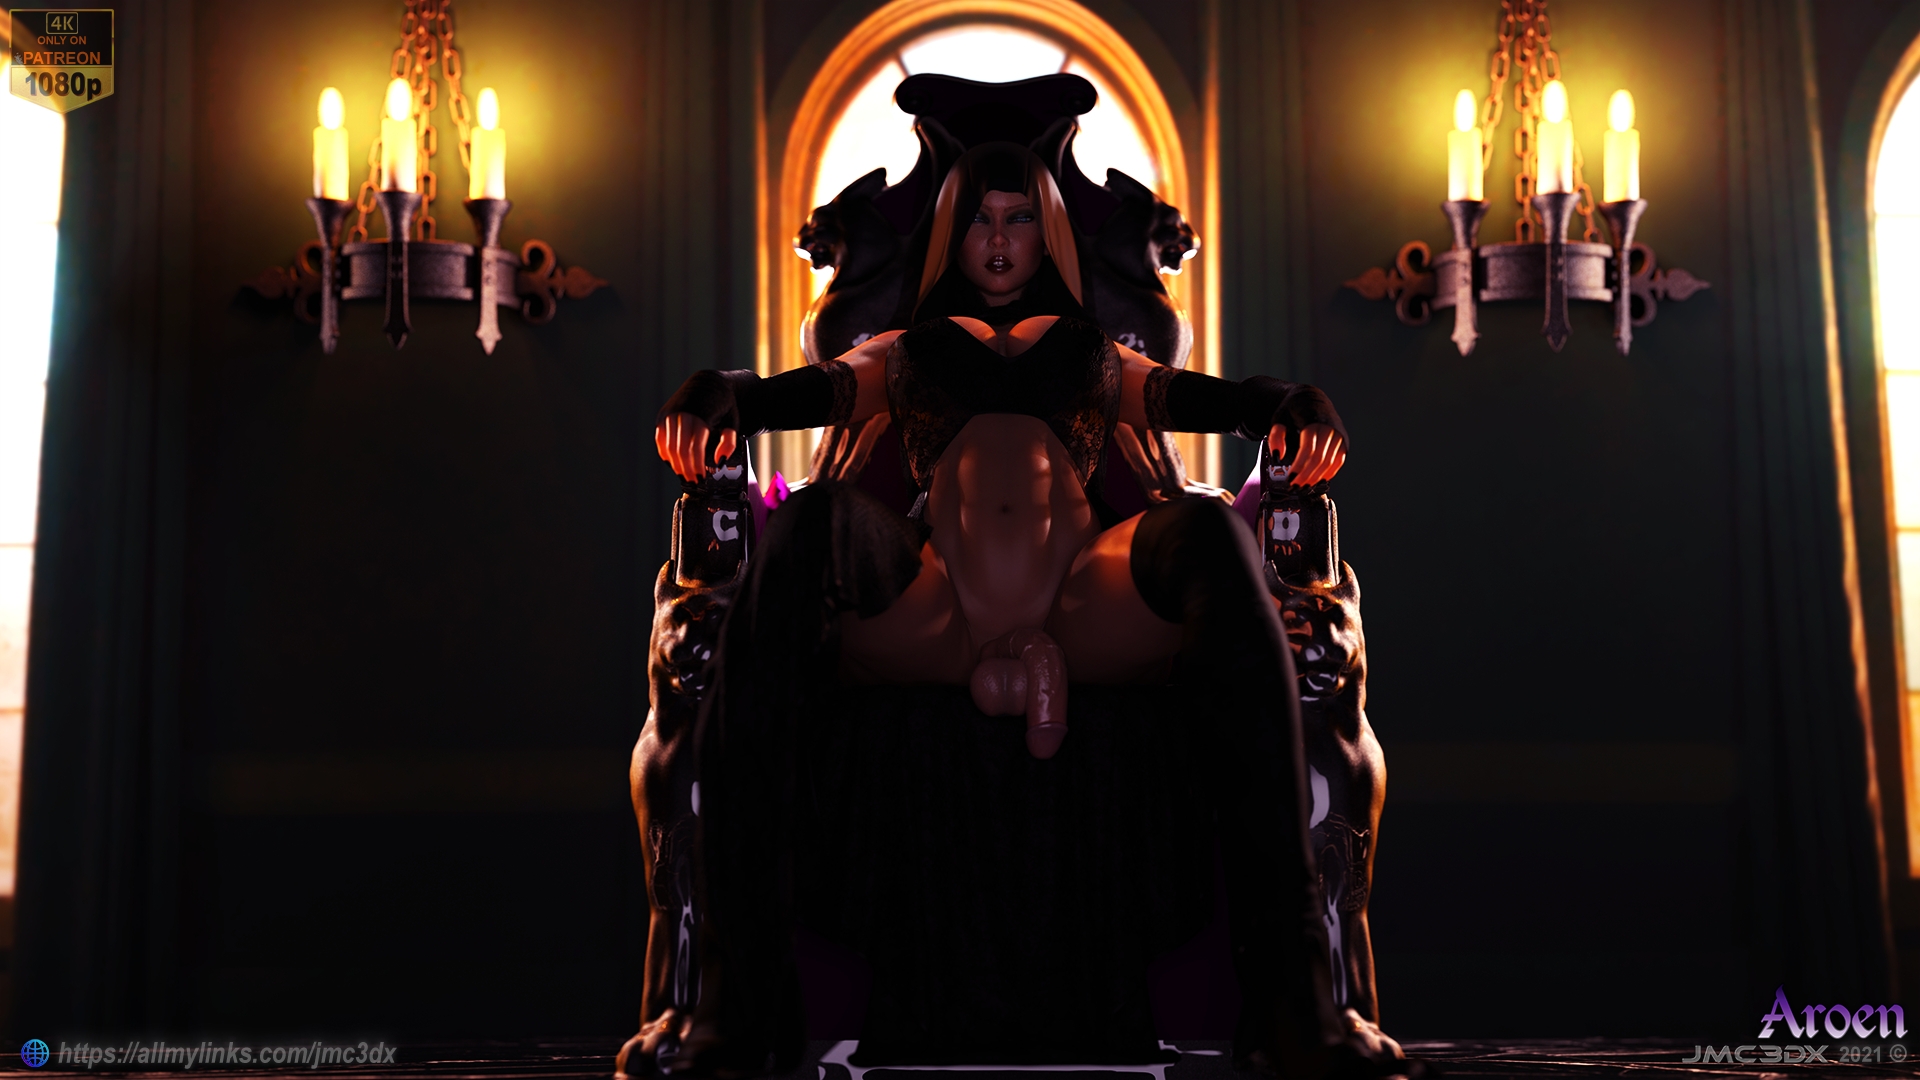 Aroen on her throne